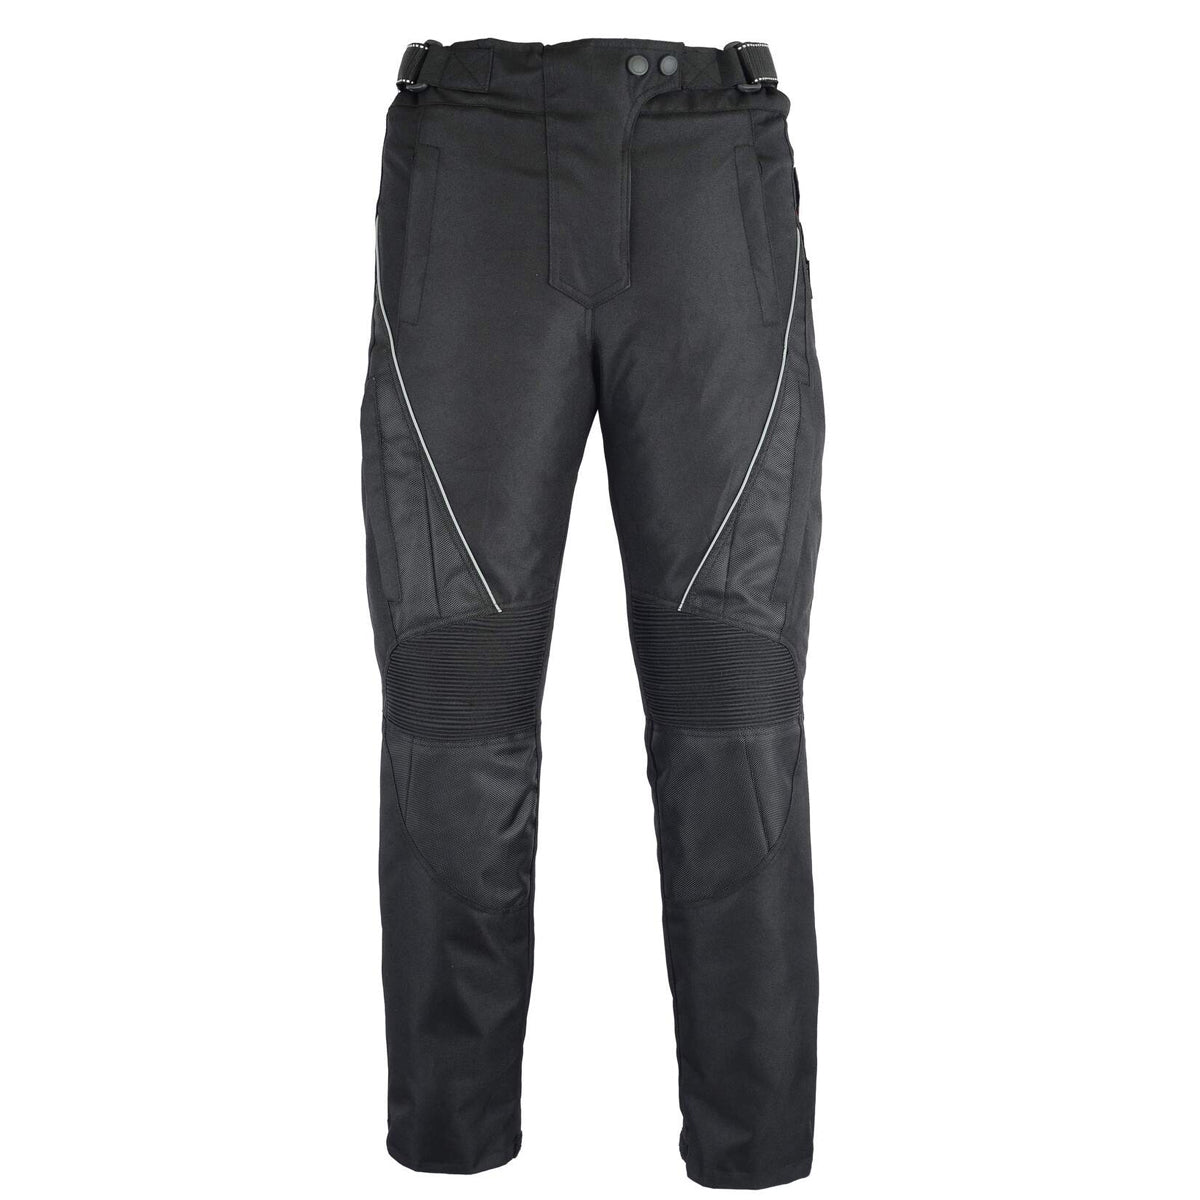 BGA Hobart Lady Leather Motorcycle Pants